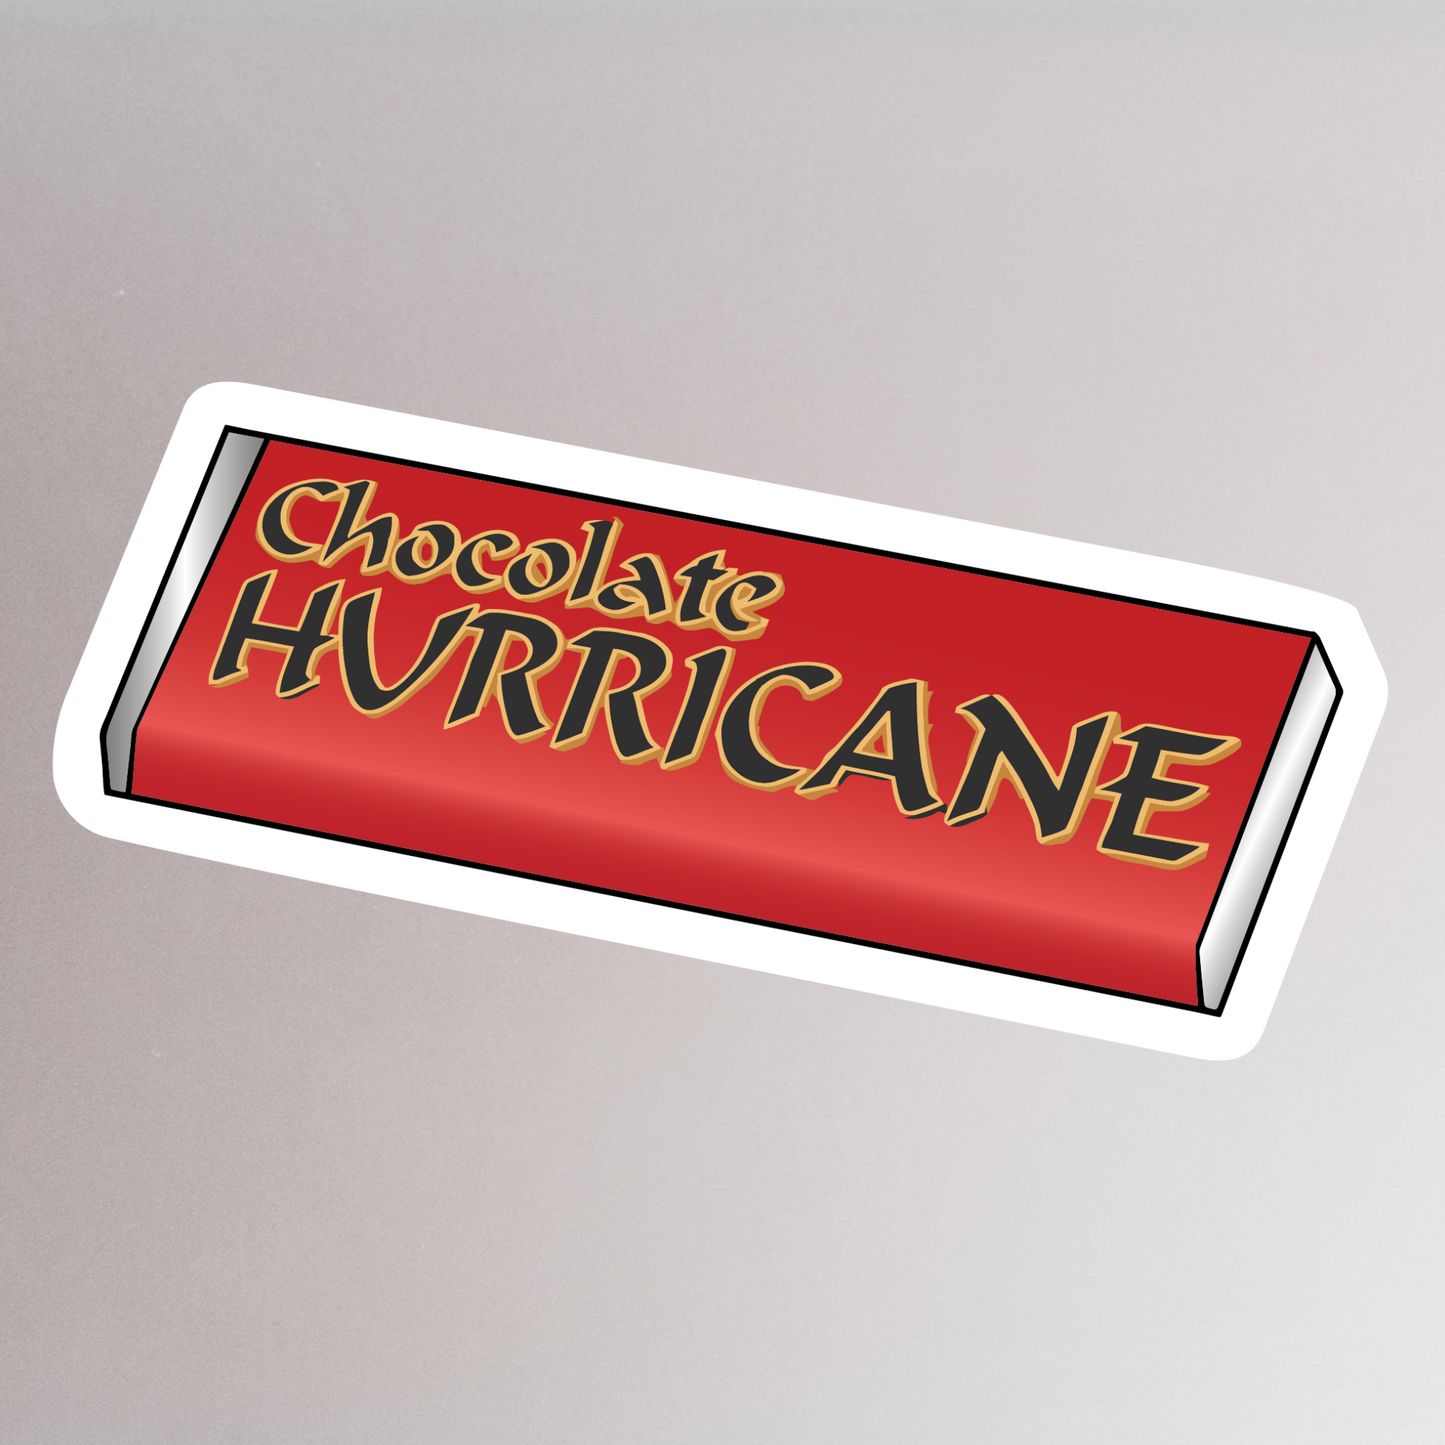 Chocolate Hurricane Bar